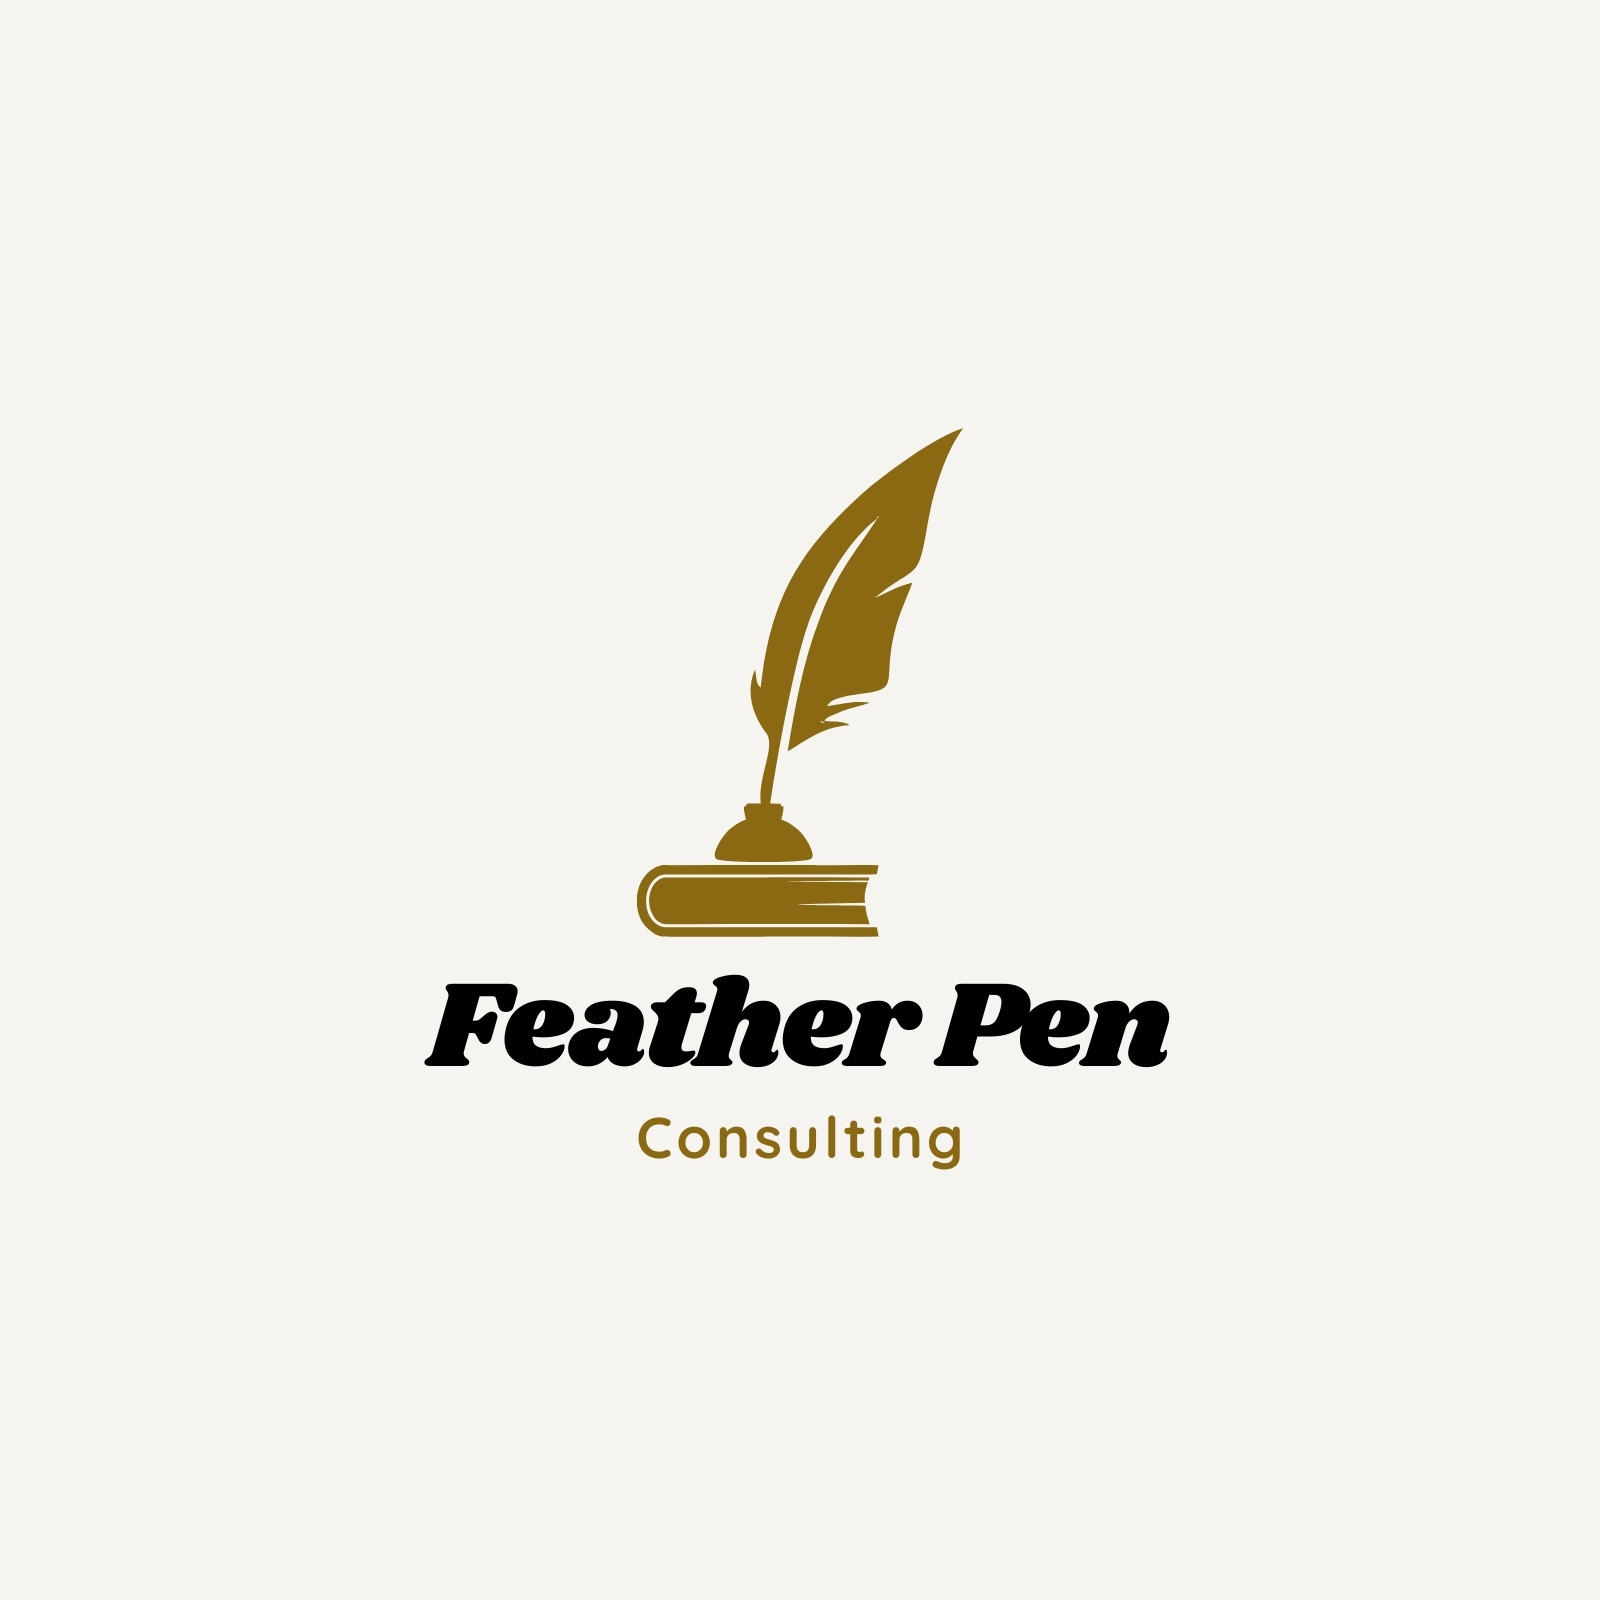 Fountain Pen Writing Design Writer Tools Vector Design Nib Pen And  Signature Illustration Stock Illustration - Download Image Now - iStock